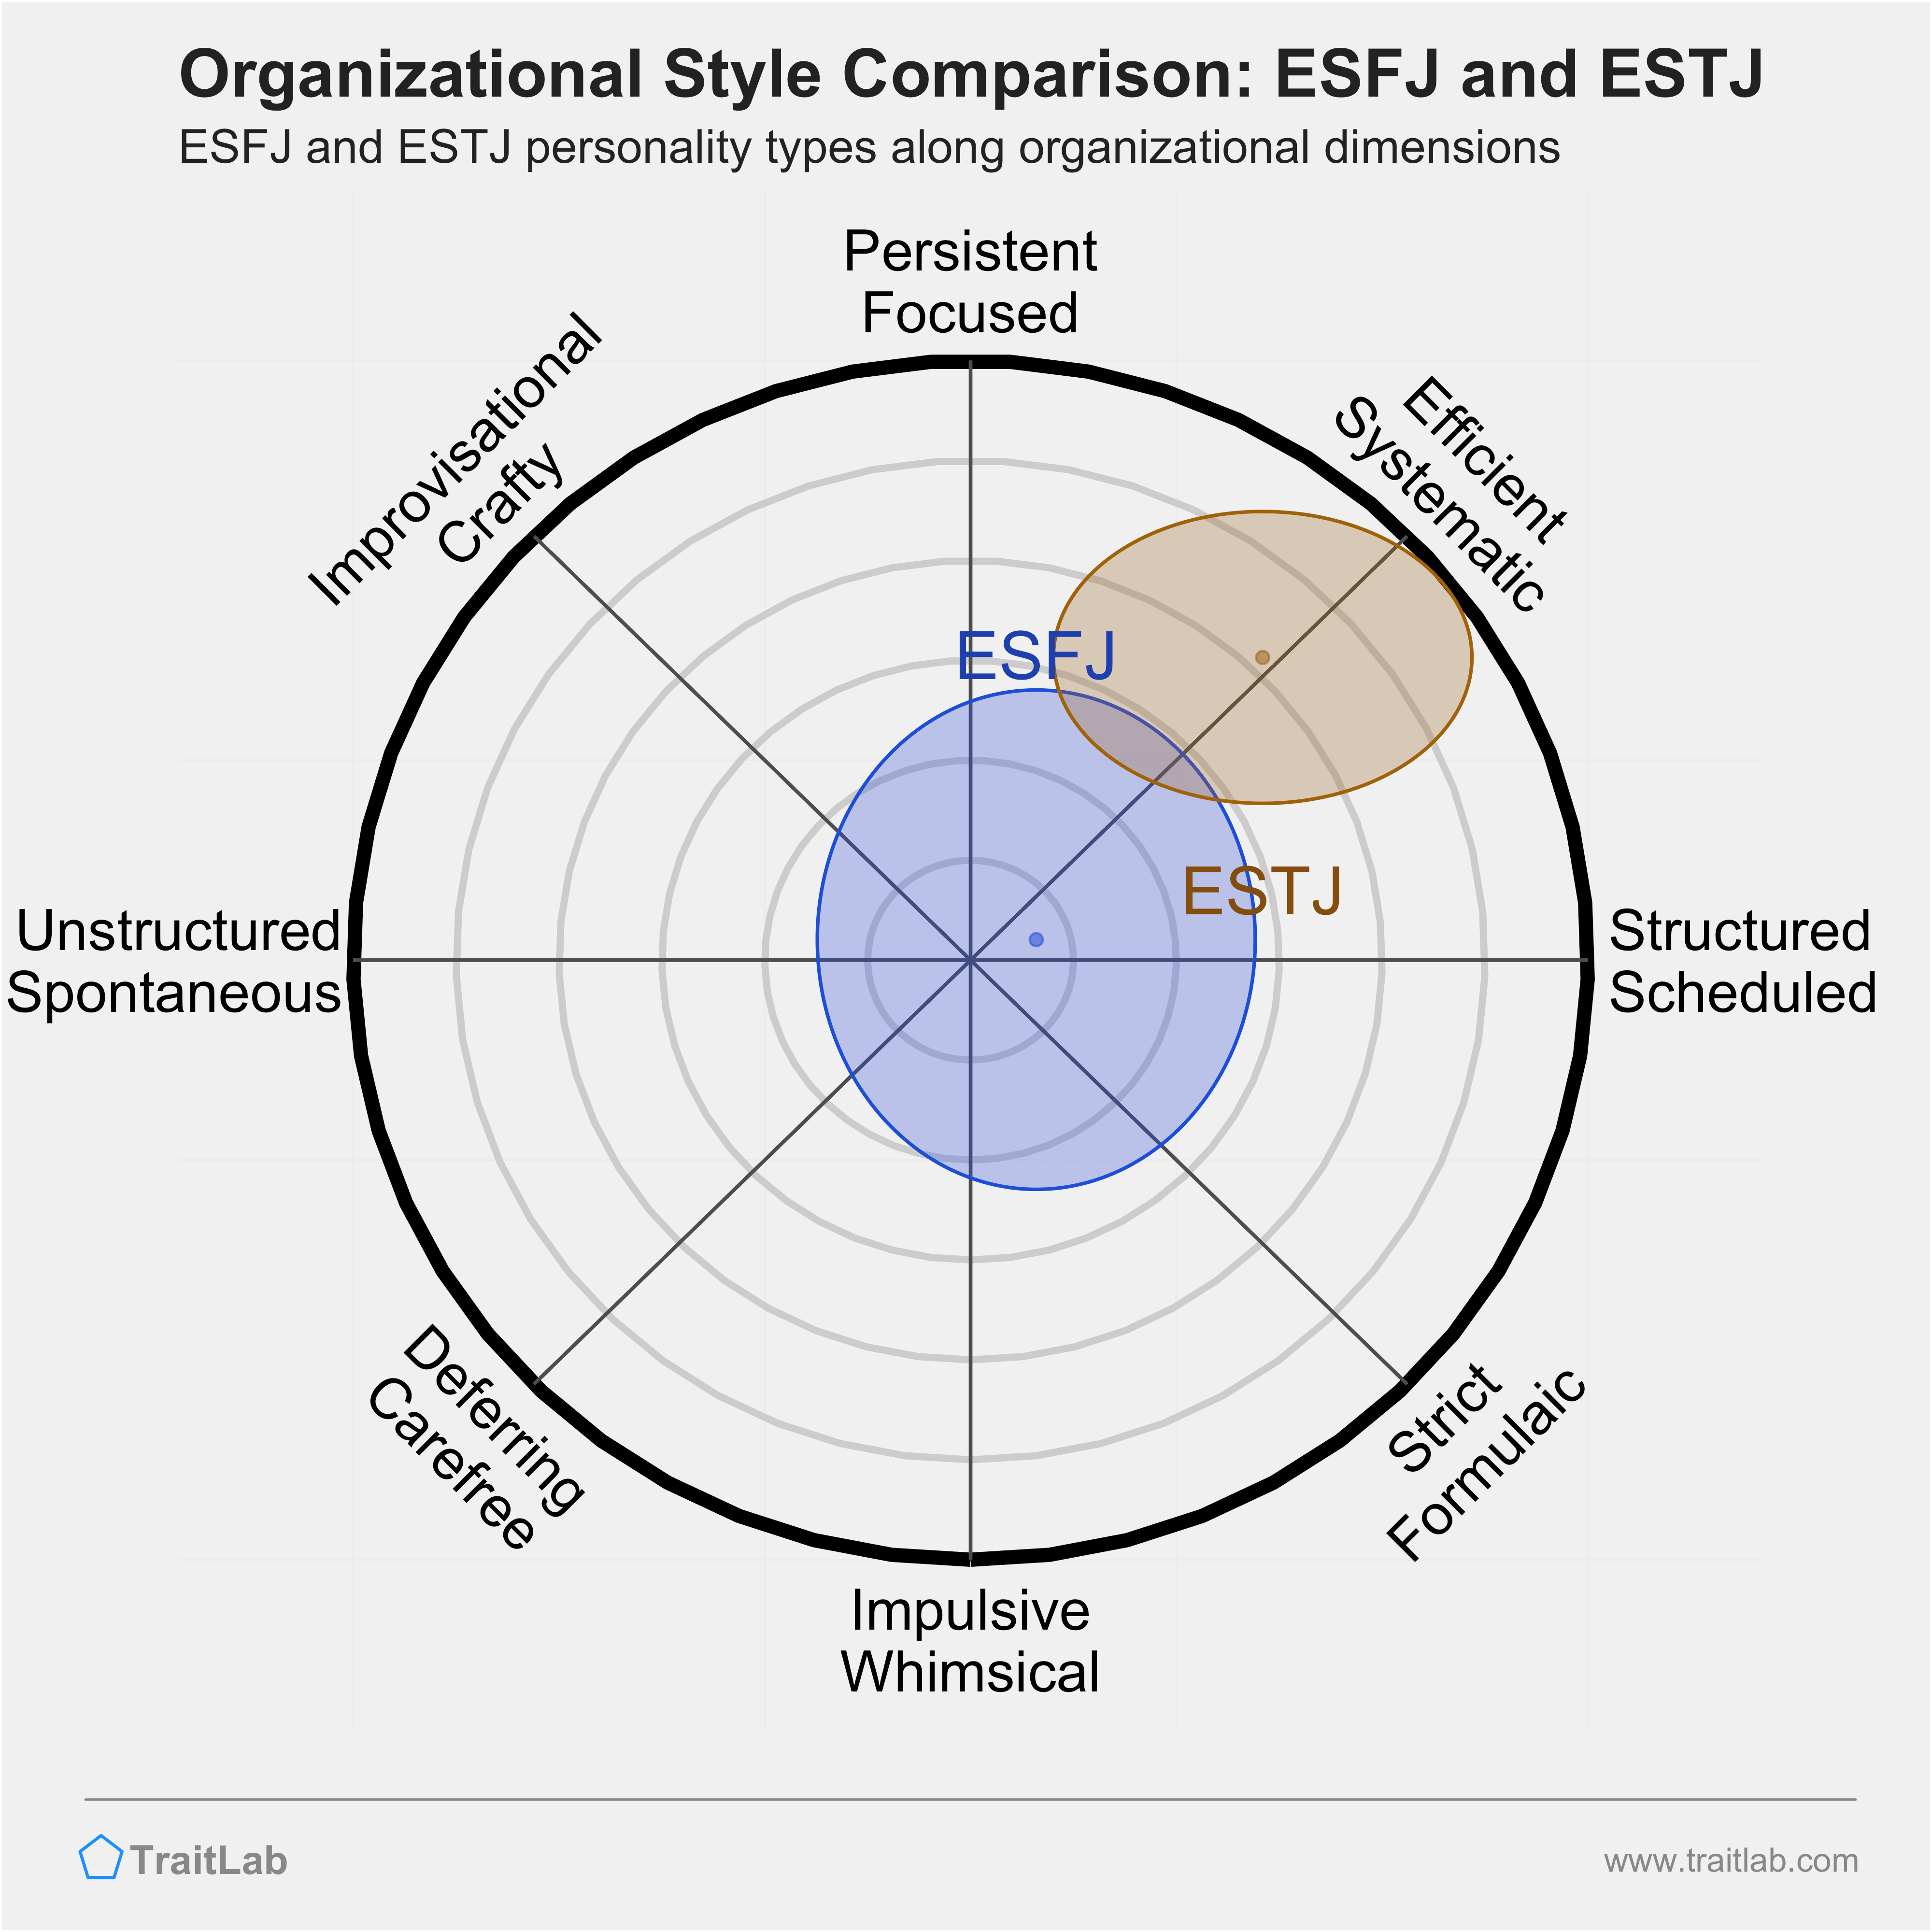 ESFJ and ESTJ comparison across organizational dimensions